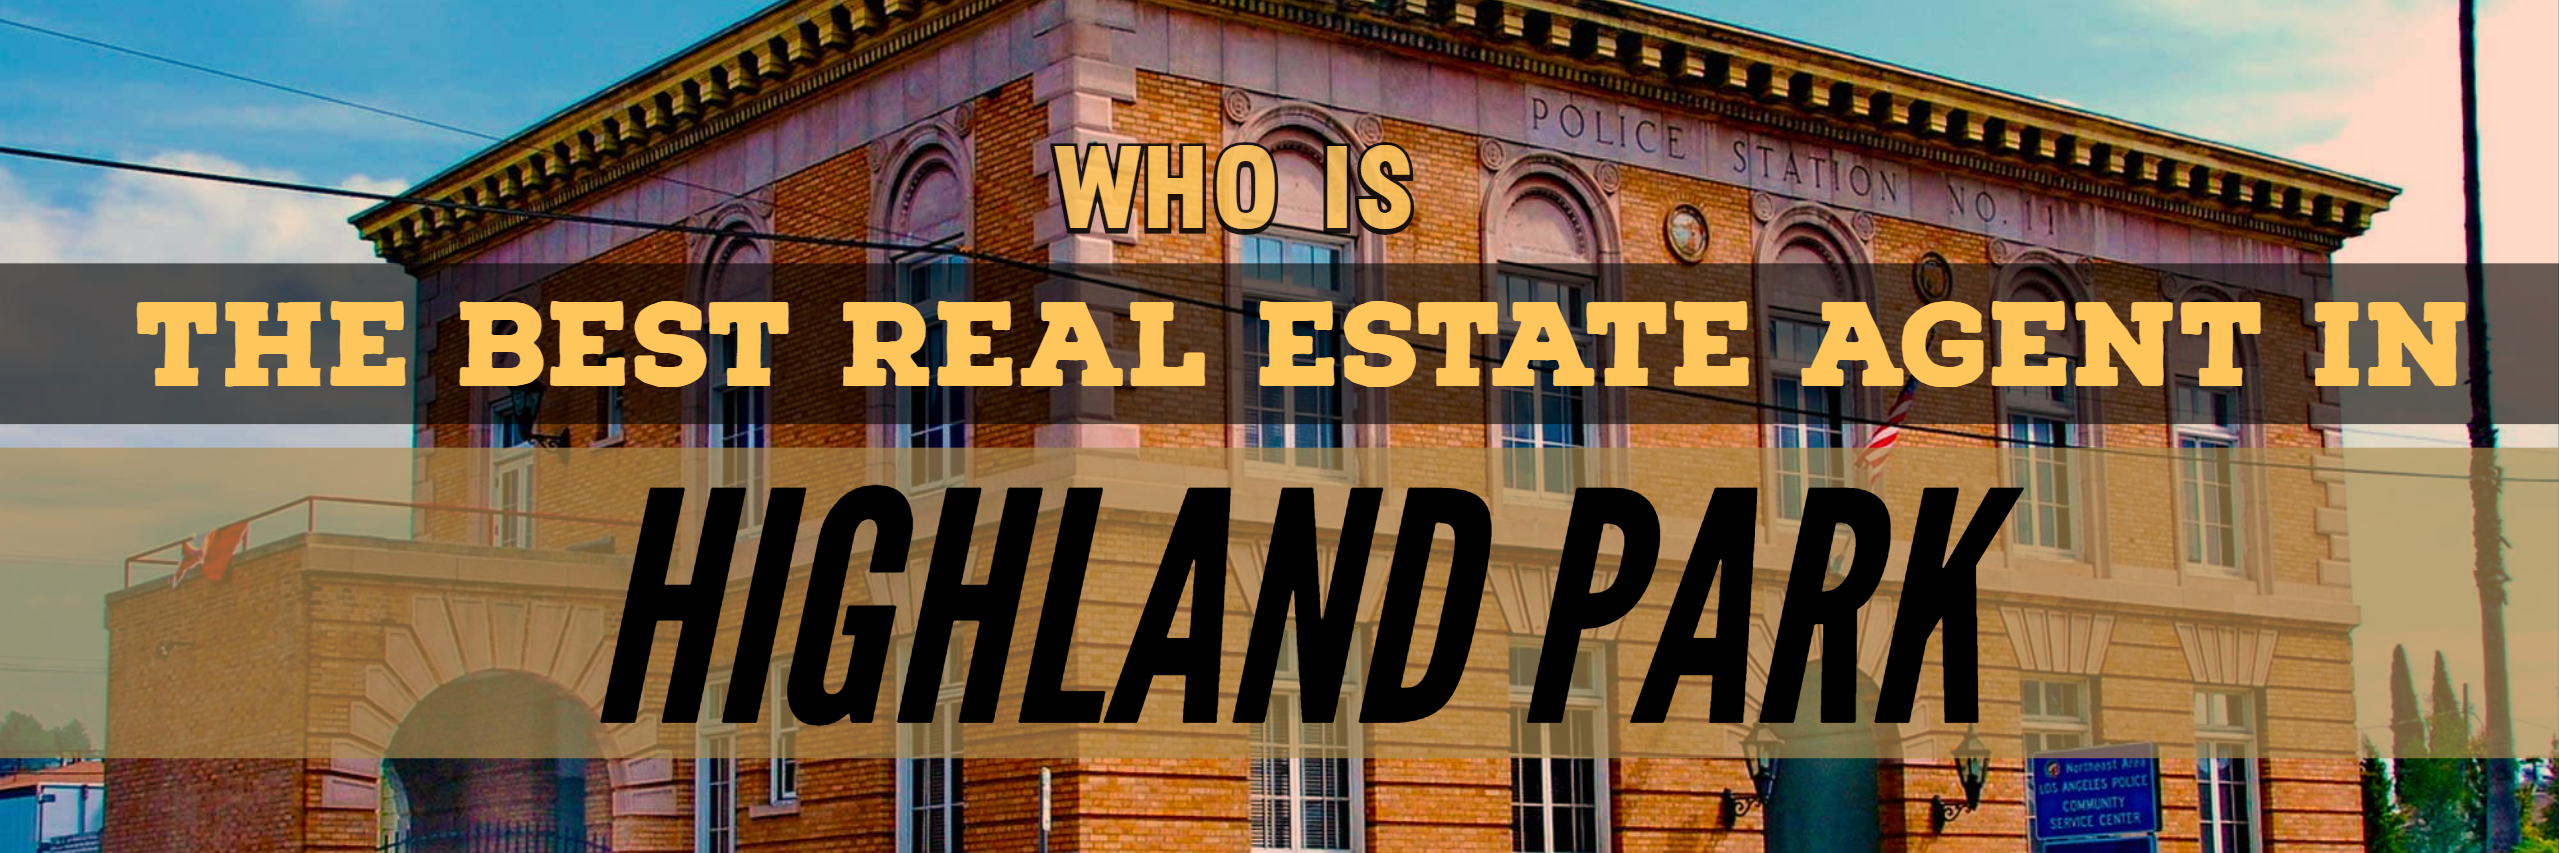 best real estate agent in highland park best realtor sell my home in highland park homes for sale in highland park paul argueta highland park 